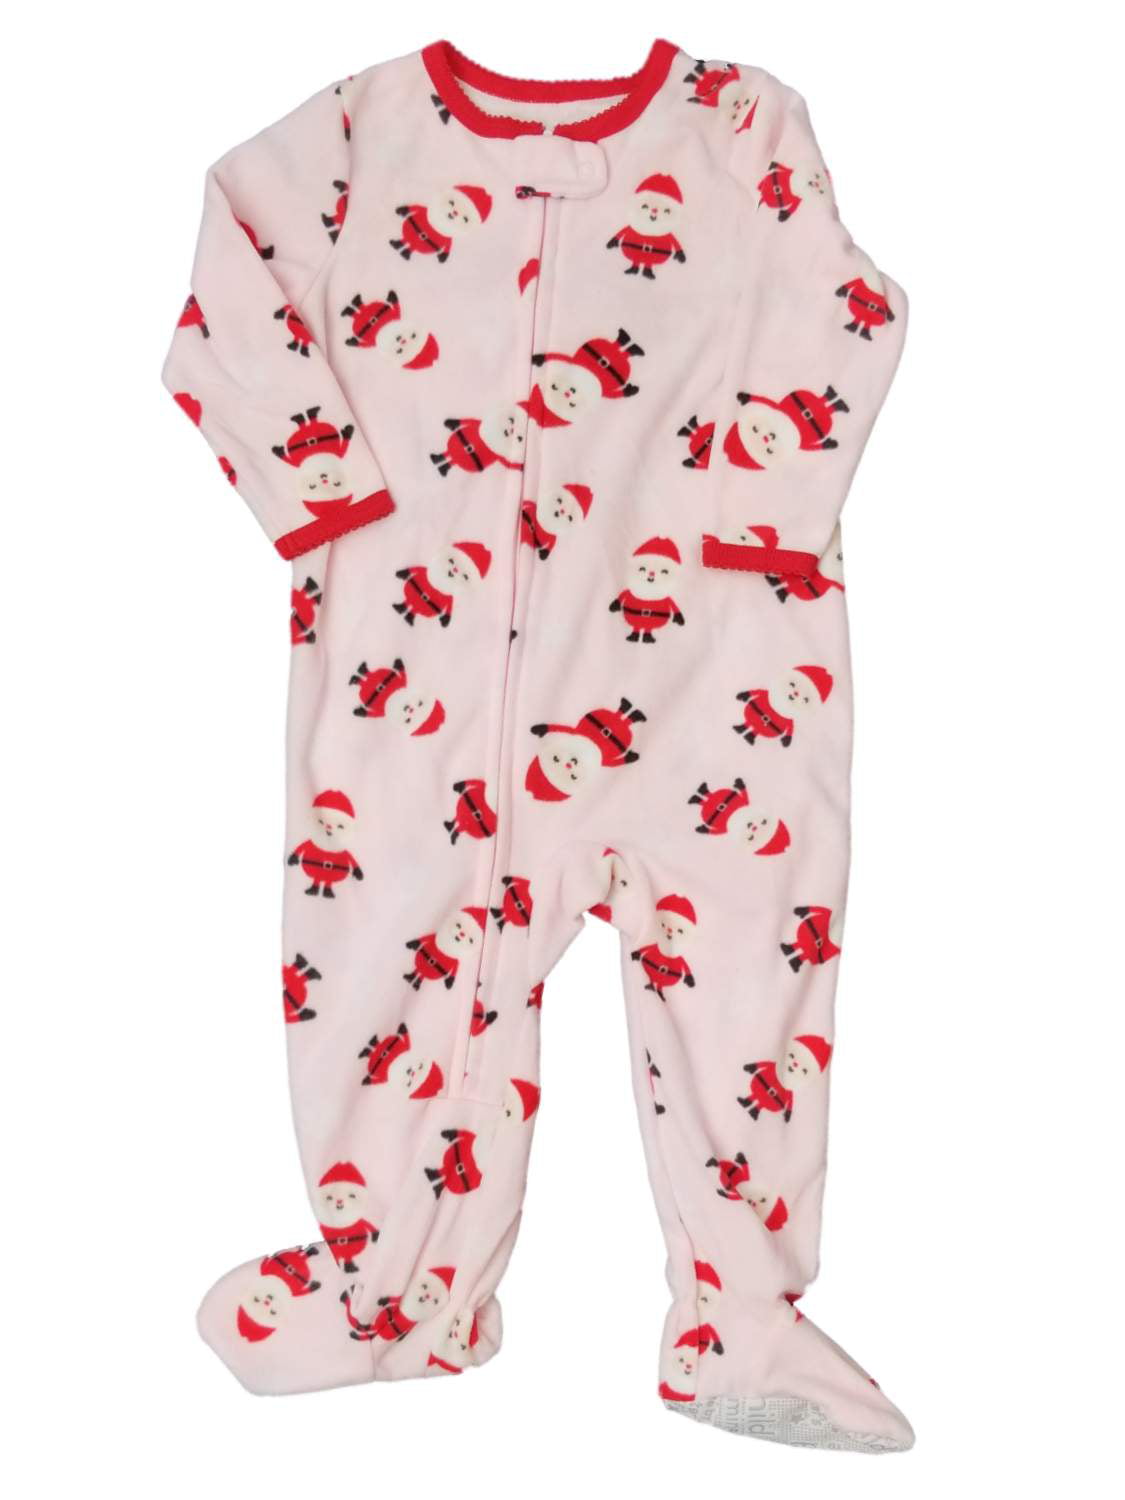 Carter's Carters Infant Girls Pink Fleece Santa Sleeper Holiday Christmas Pajamas Walmart